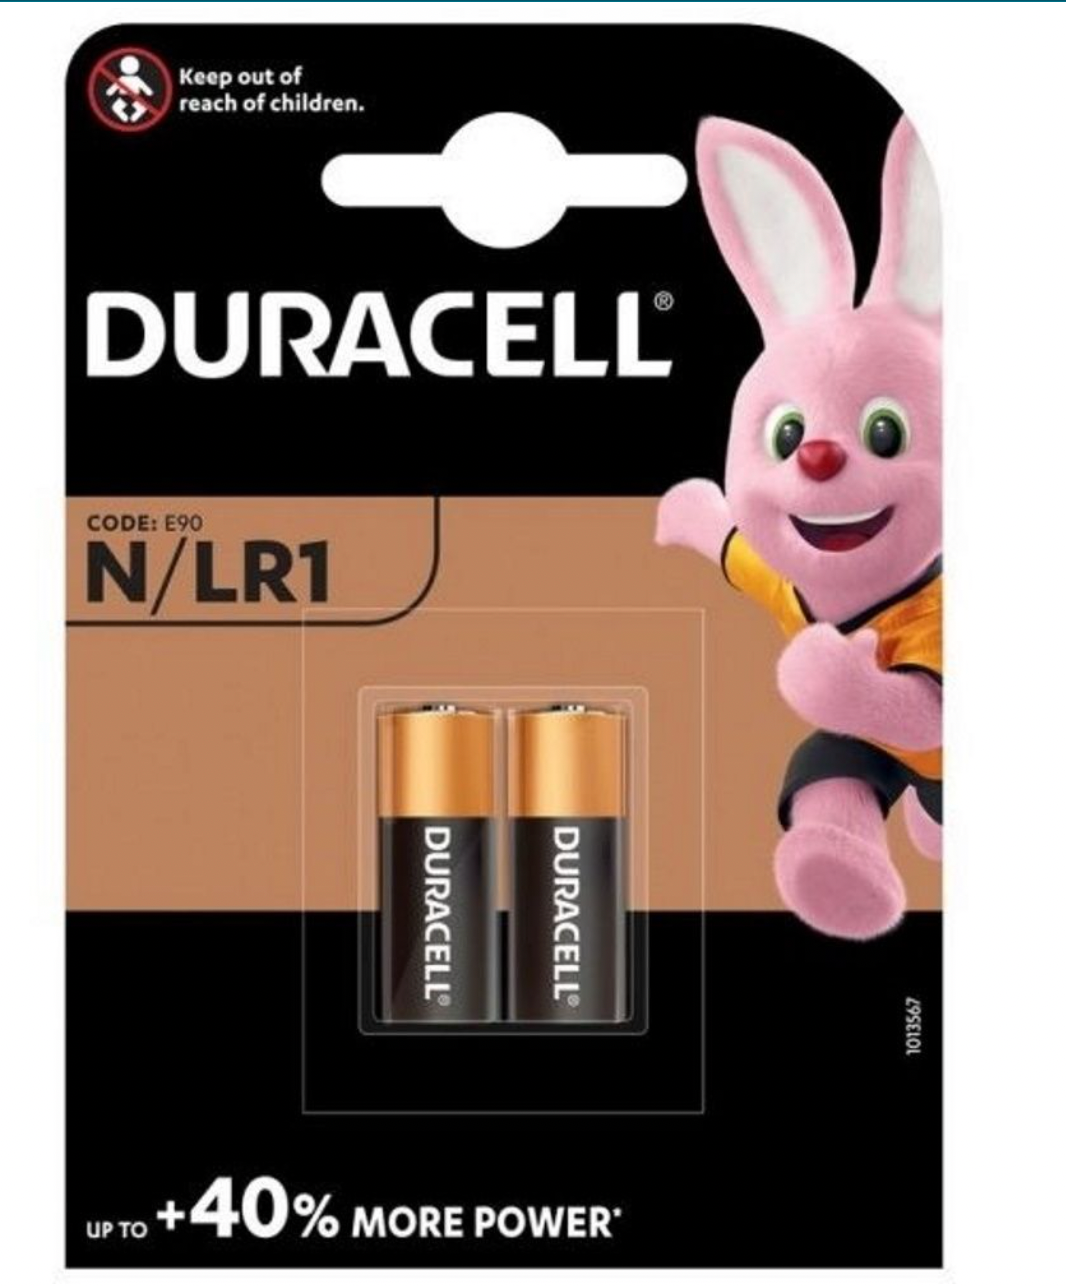 Duracell N/LR1 Batteries 2 Pack